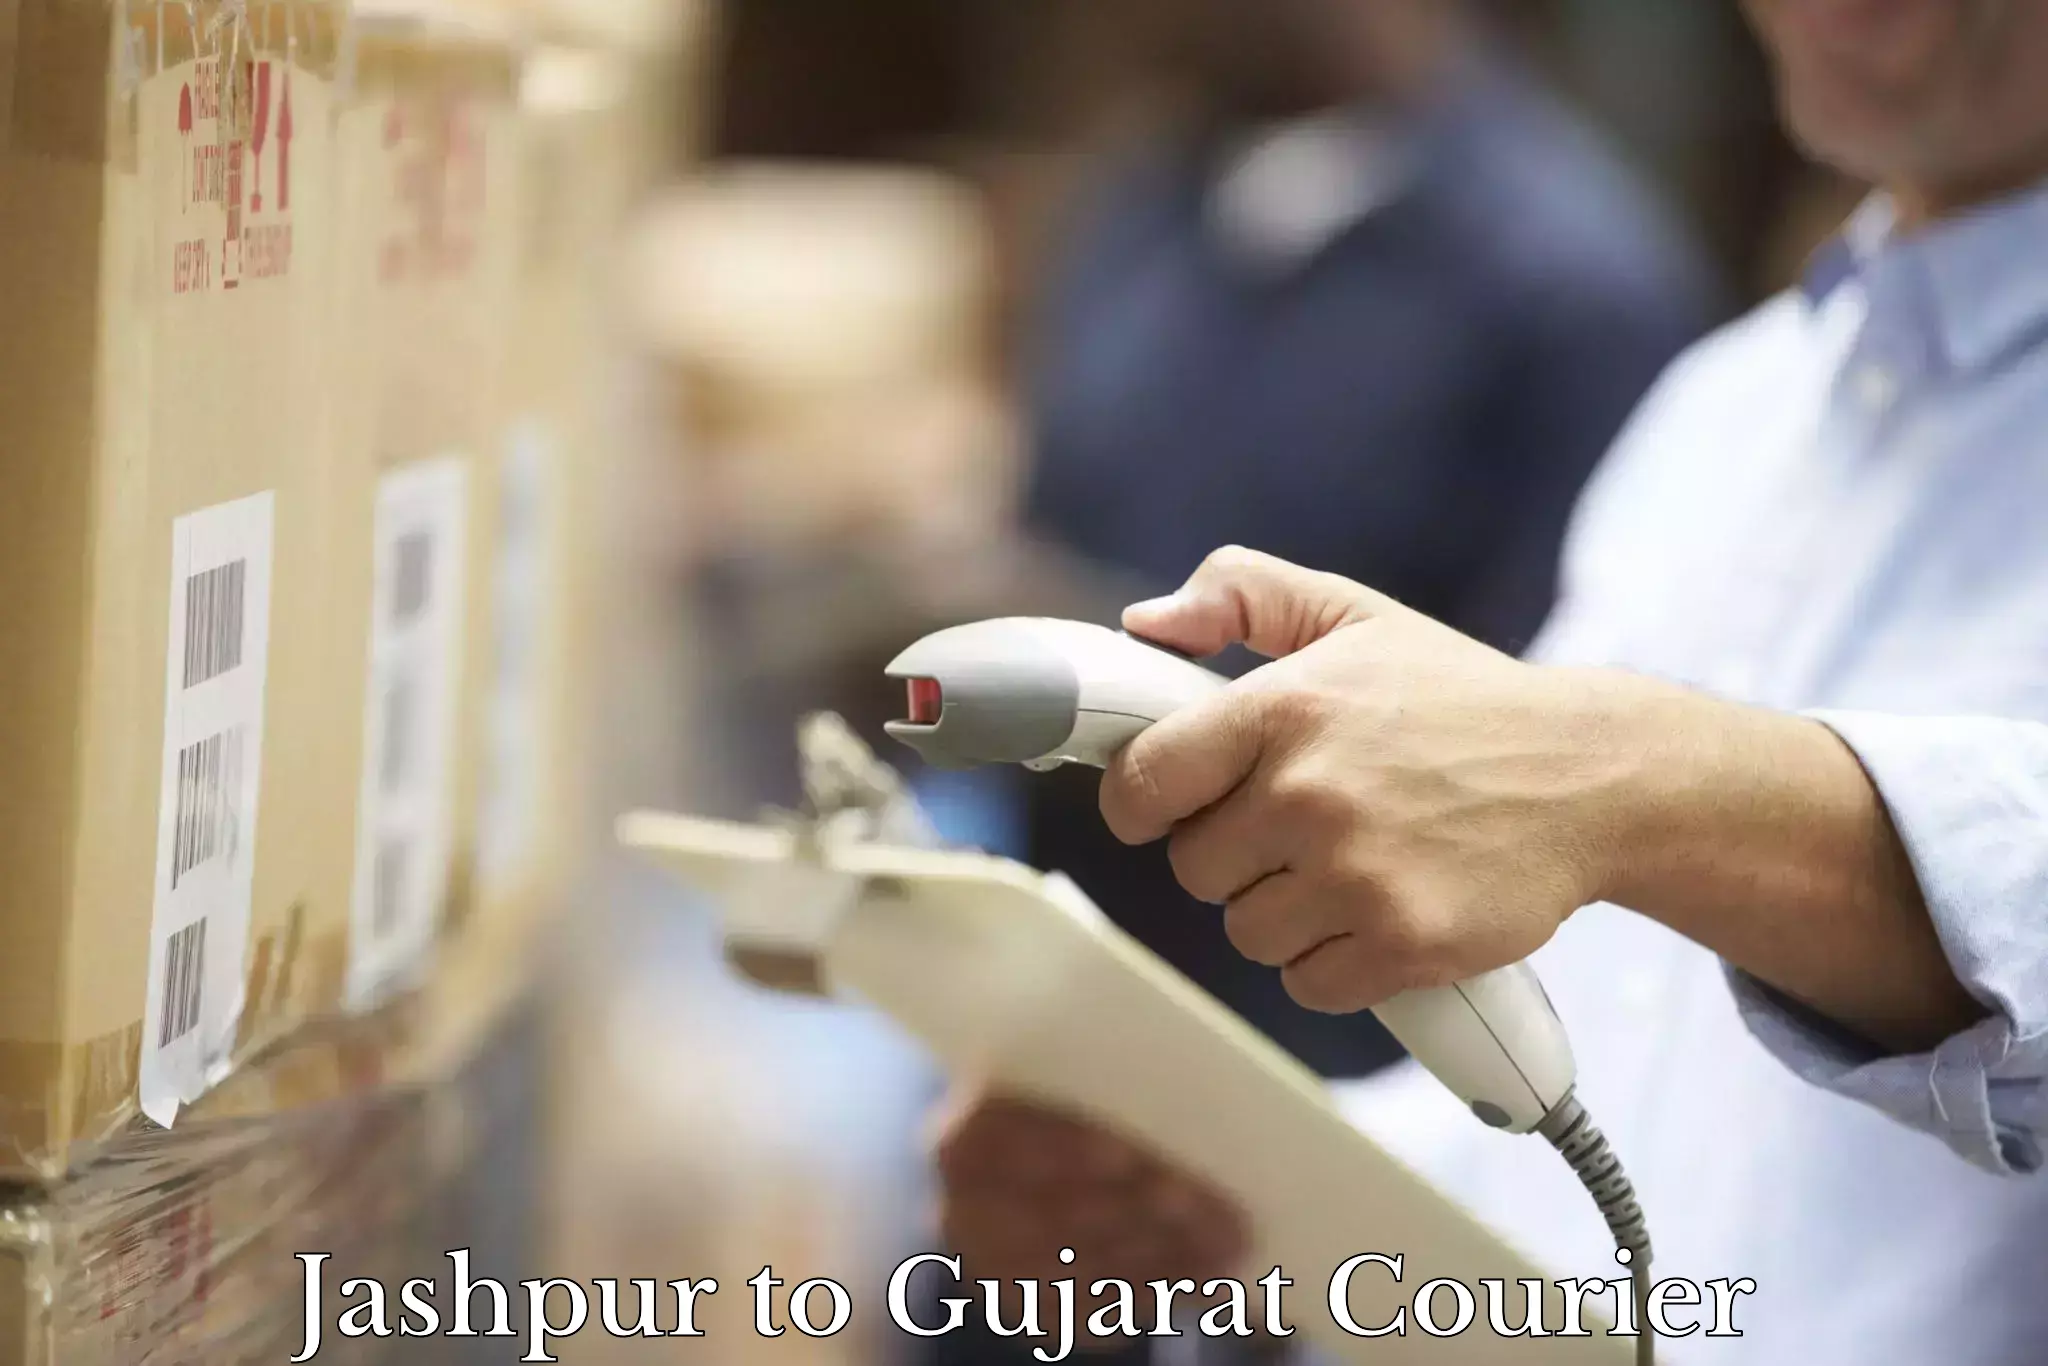 Multi-service courier options Jashpur to Ahmedabad